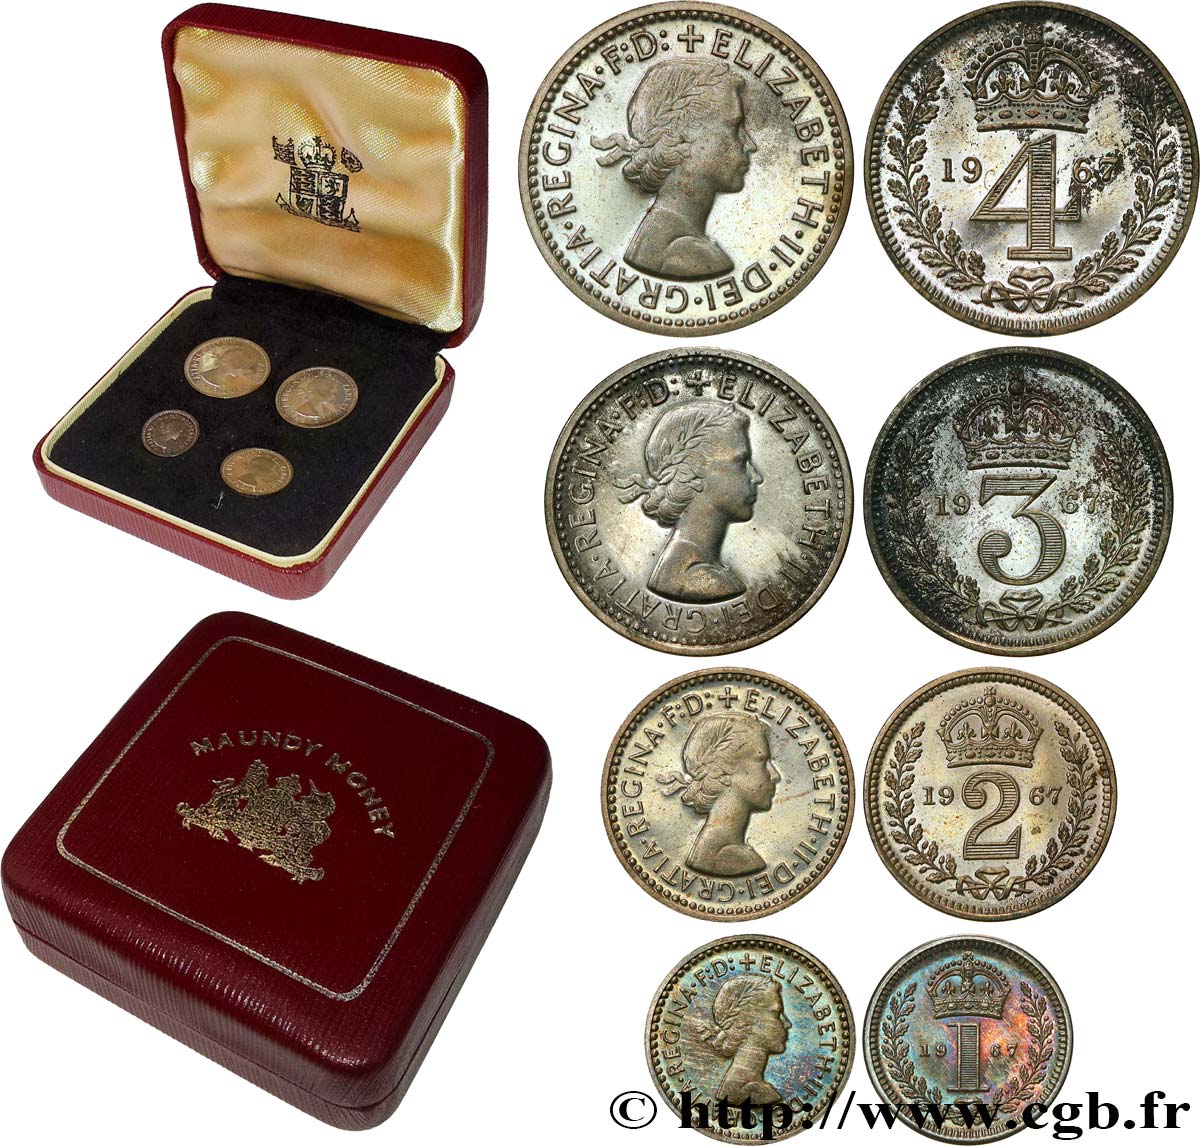 UNITED KINGDOM Maundy set - Penny, 2 pence, 3 pence et 4 pence 1967  Brilliant Uncirculated 